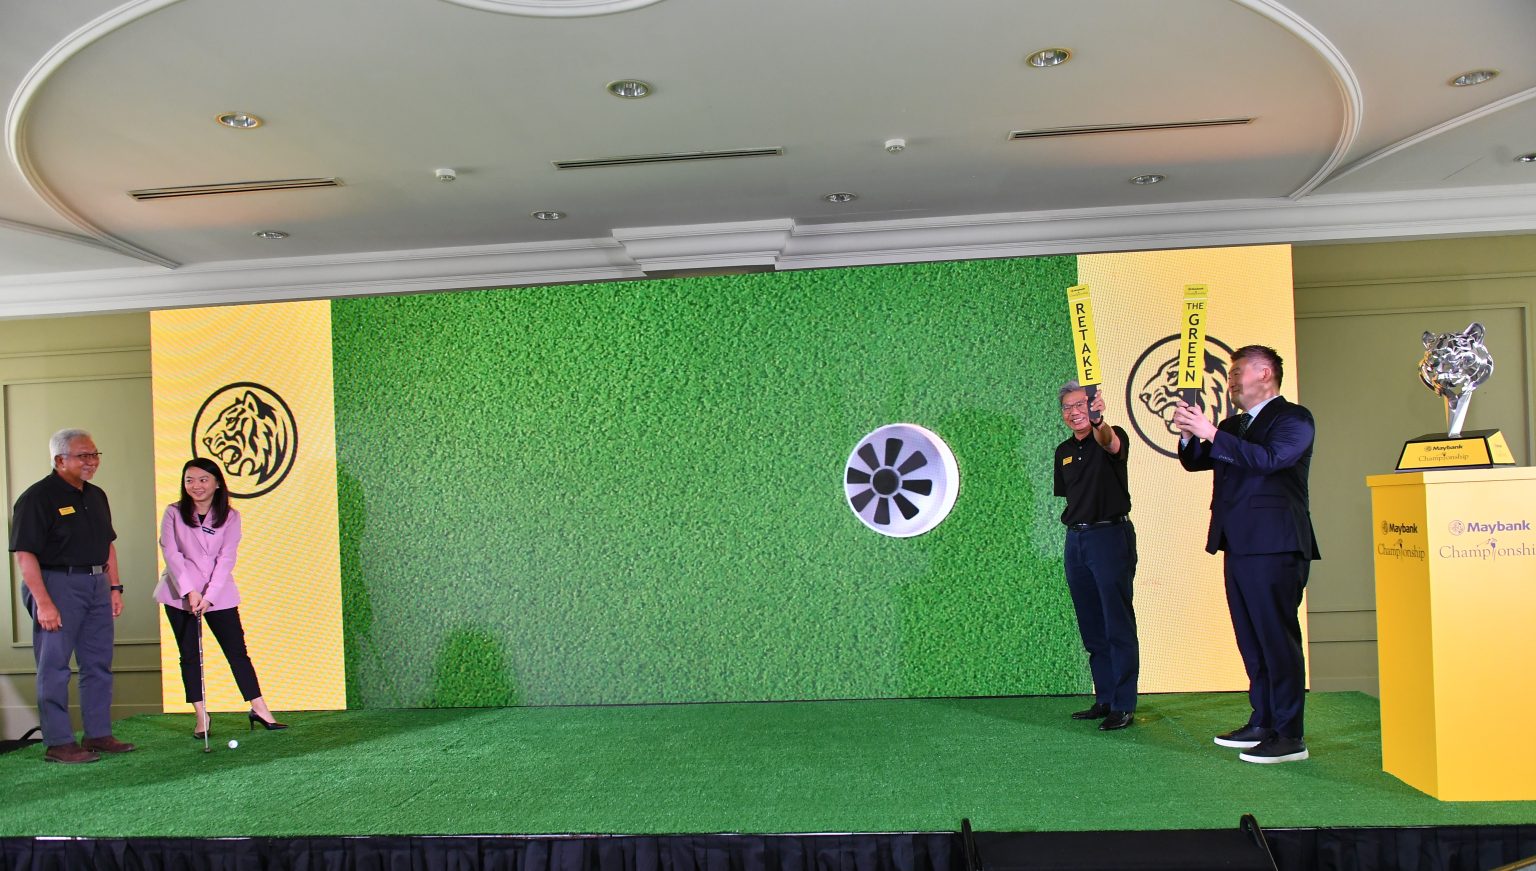 The LPGA Tour returns to Malaysia as the Maybank Championship 2023 at